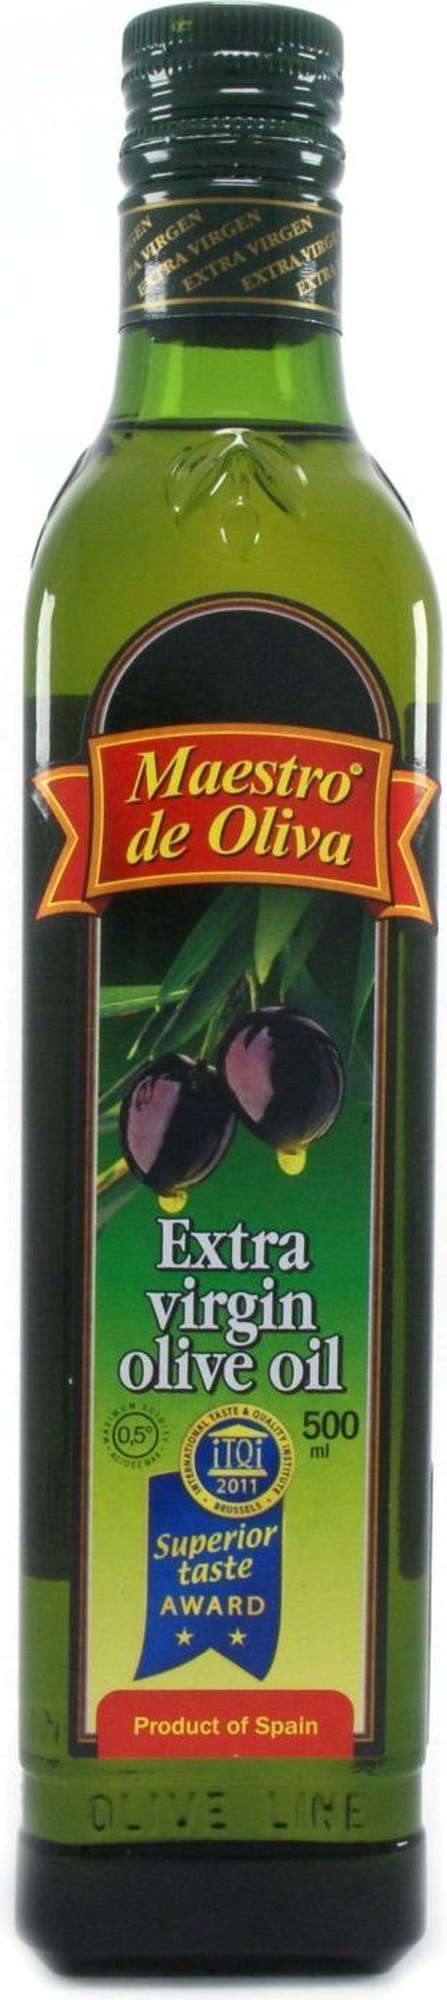 De oliva масло. Масло маэстро дэ олива оливковое ev 0.25л. Maestro de Oliva масло оливковое ev 0.25. Масло оливковое Maestro de Oliva 500мл. Maestro de Oliva 500 мл Olive Oil.